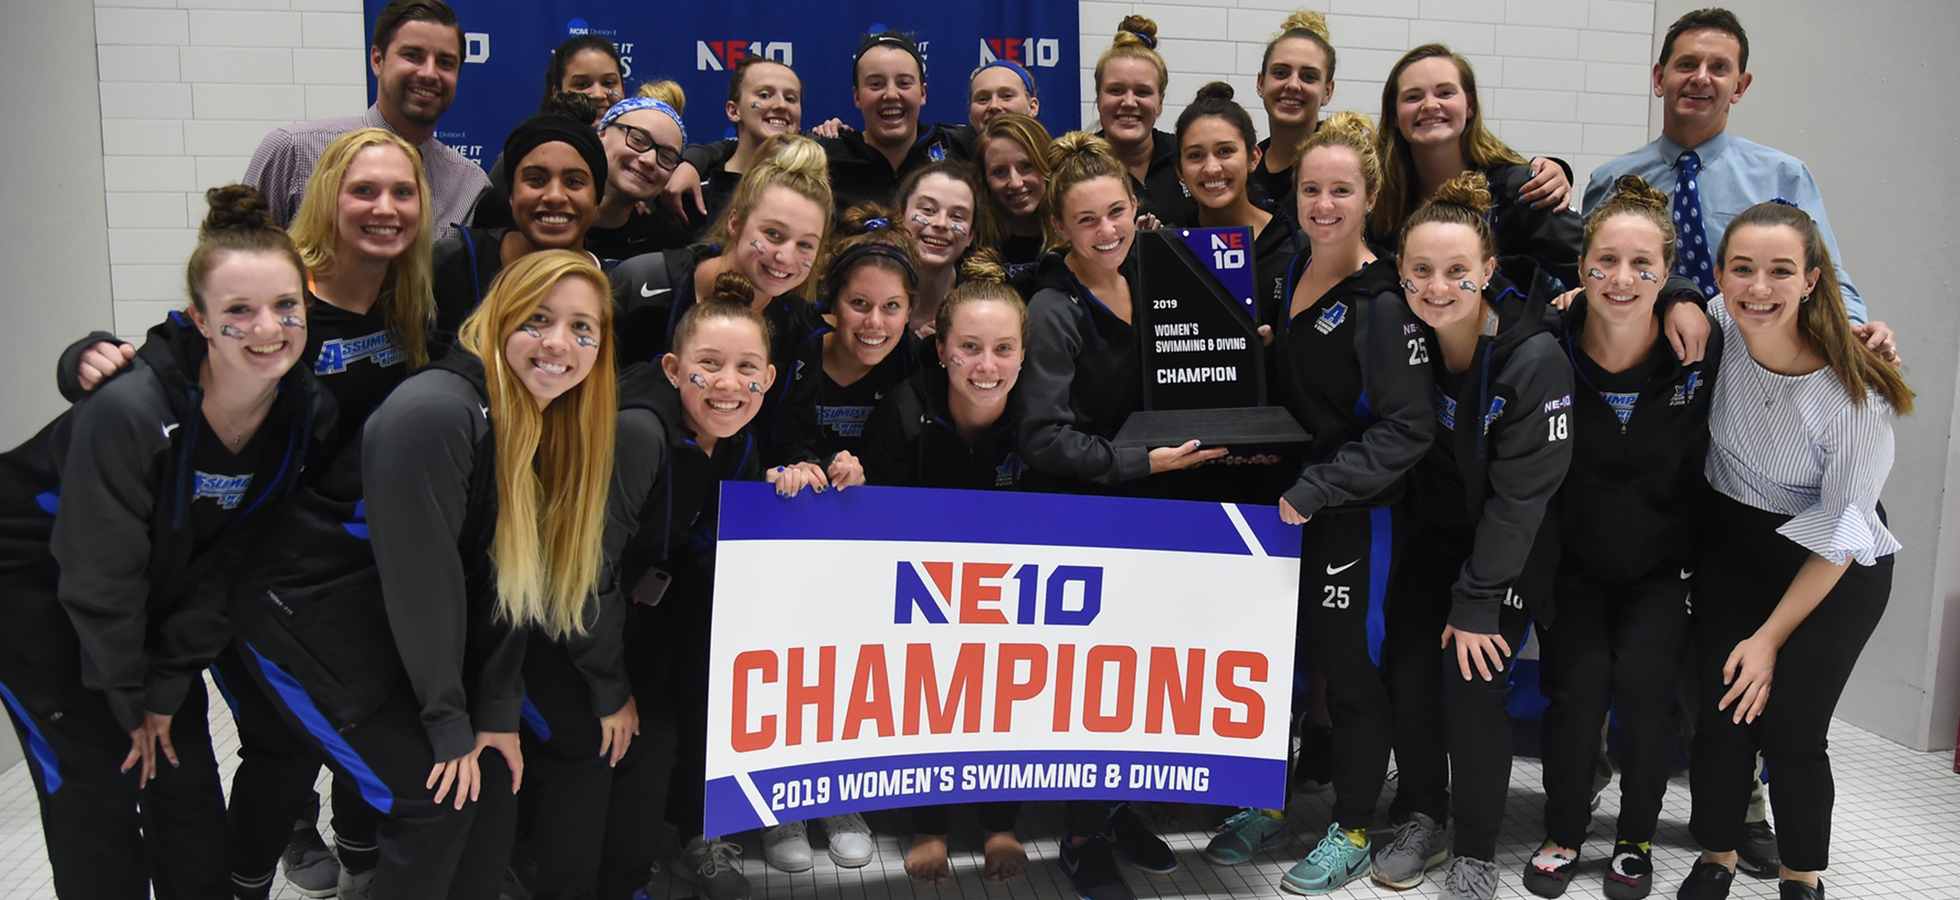 Women’s Swimming & Diving Team Wins NE10 Championship